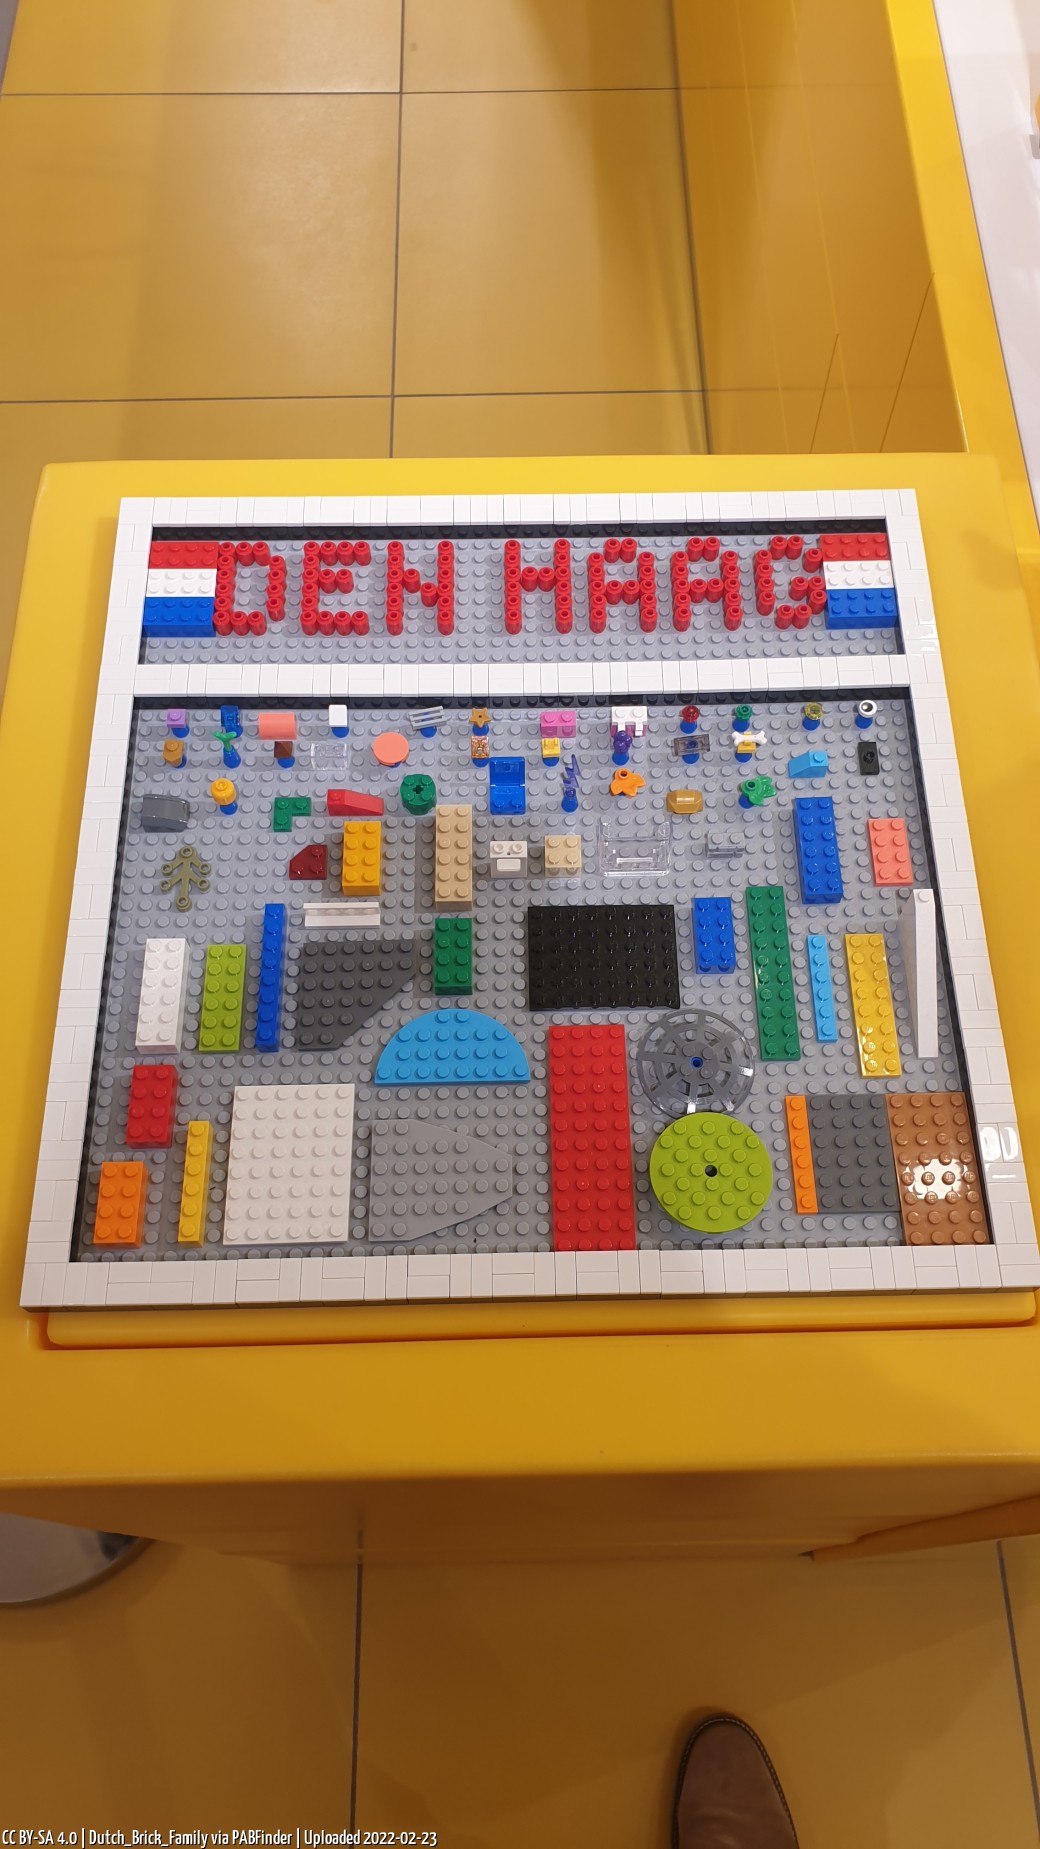 Pick a Brick Mall of the Netherlands (Dutch_Brick_Family, 2/23/22, 8:33:37 AM)